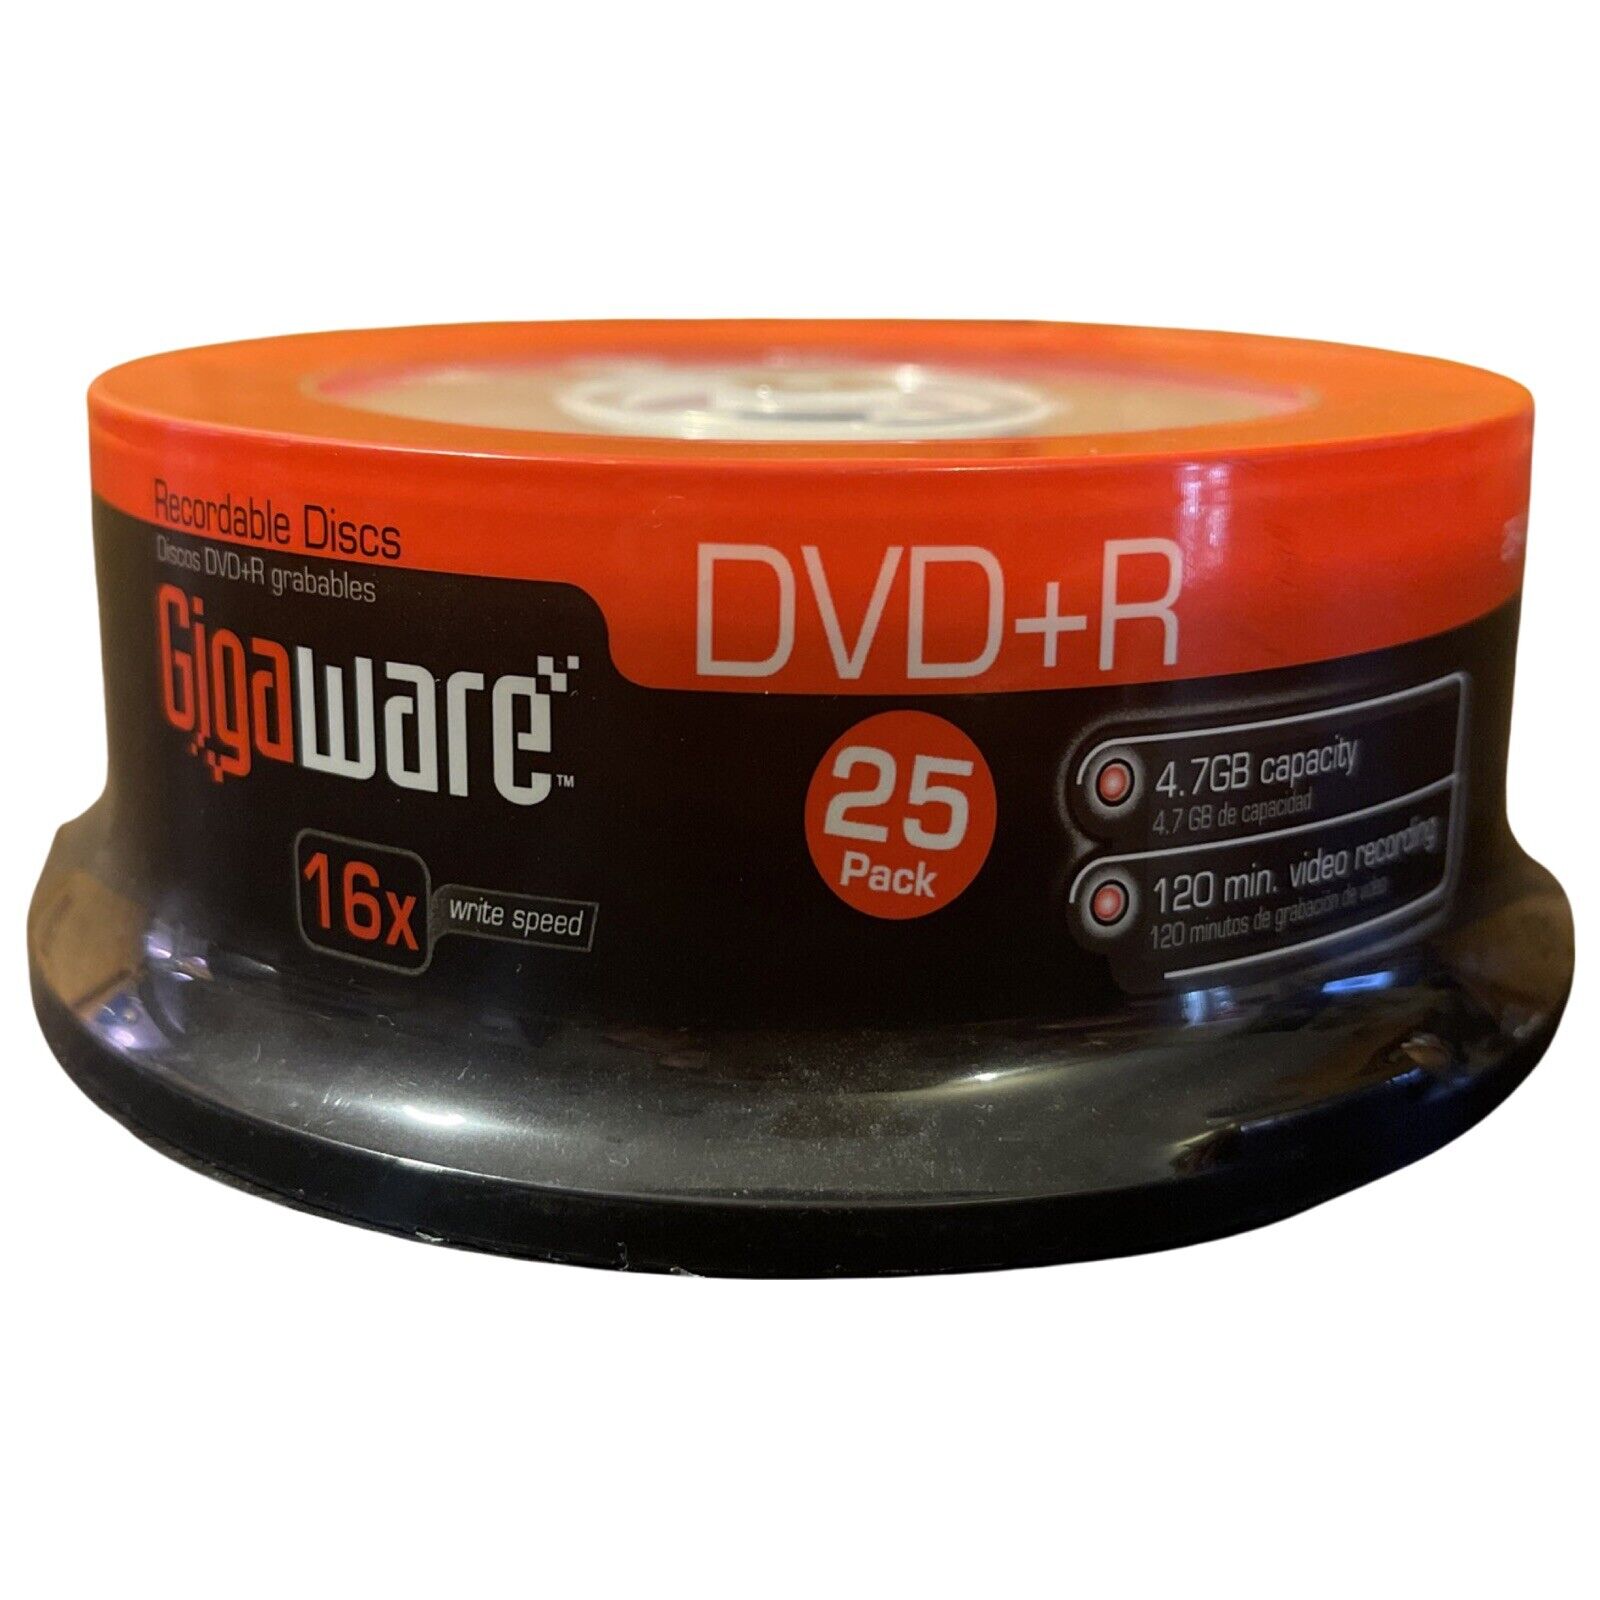 GIGAWARE  DVD R 120Min 4.7GB DATA 16X Speed 25 Pack Blank Discs New Sealed